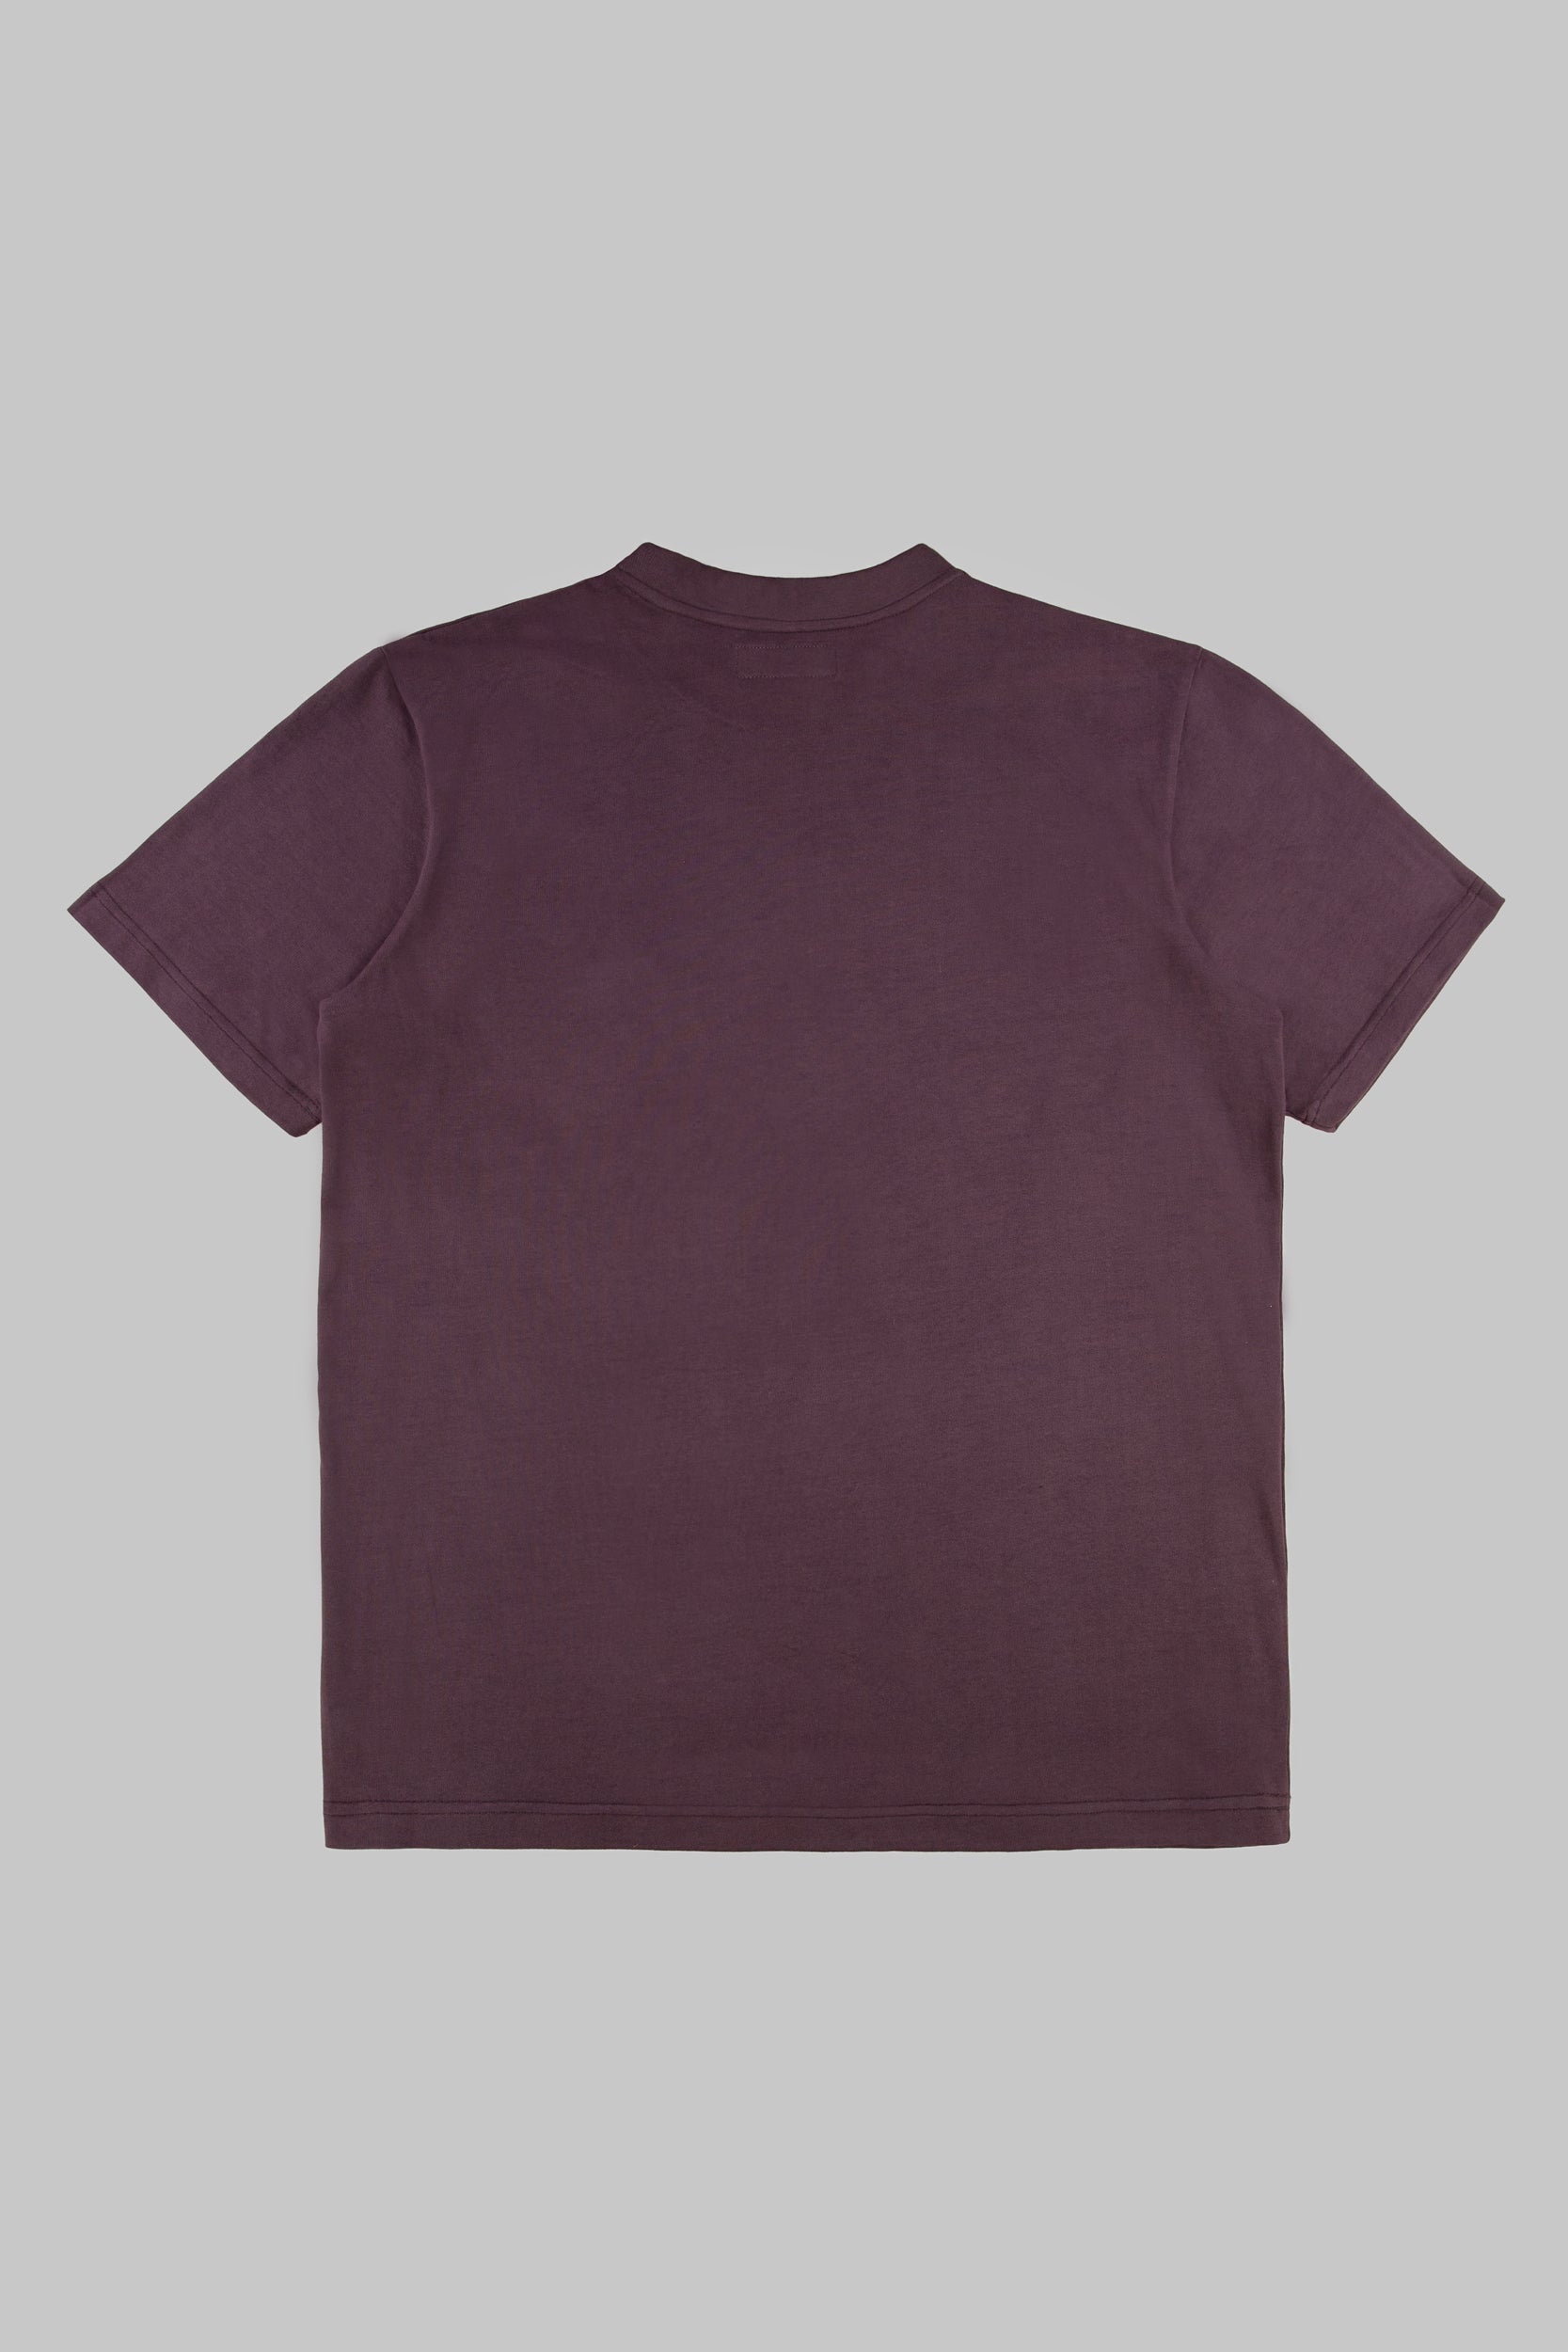 Pocket T-Shirt Bordeaux